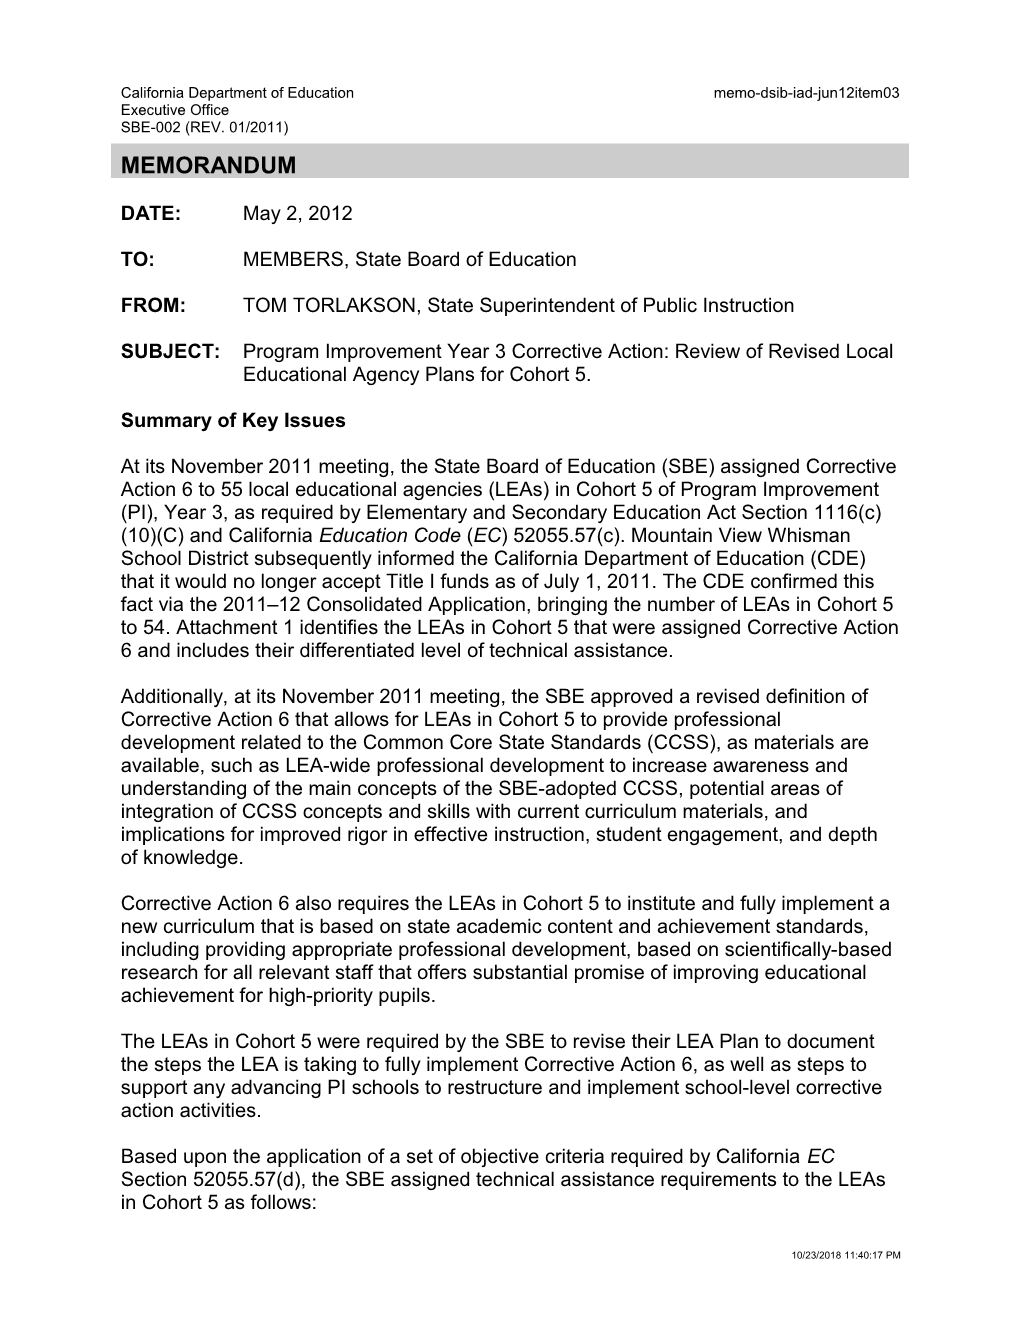 June 2012 Memorandum IAD Item 3 - Information Memorandum (CA State Board of Education)